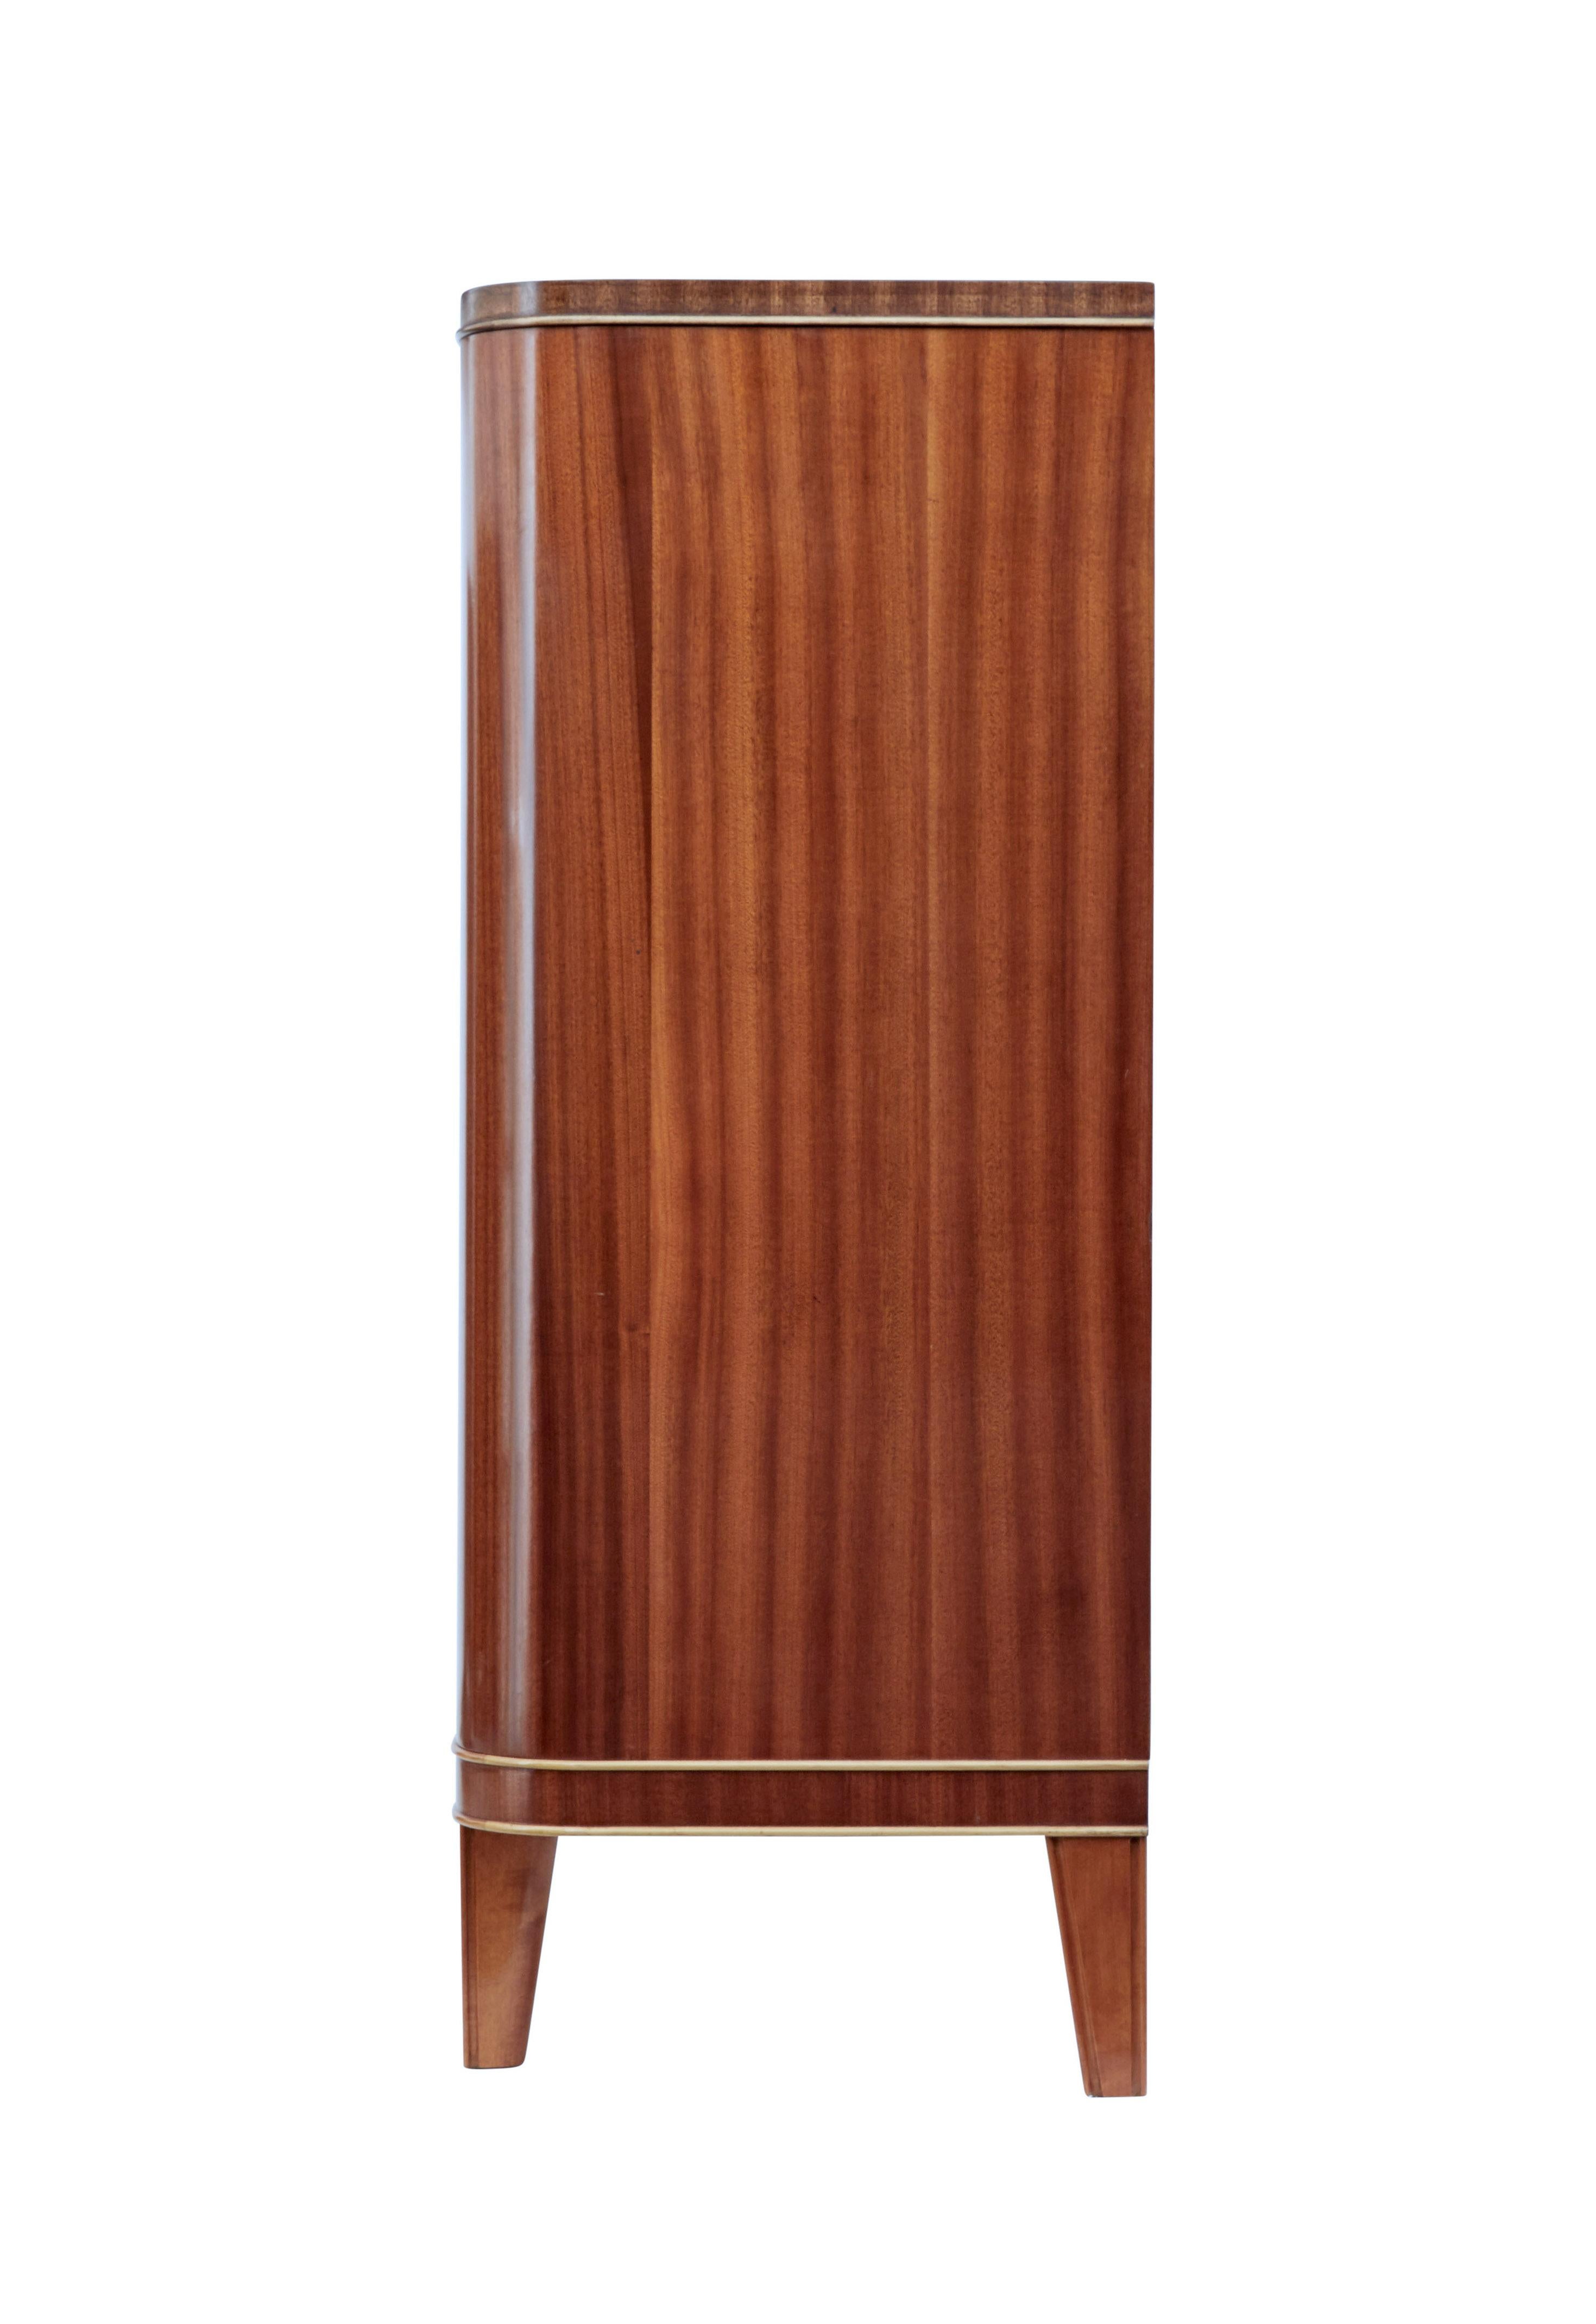 Veneer Mid 20th century Scandinavian modern mahogany sideboard